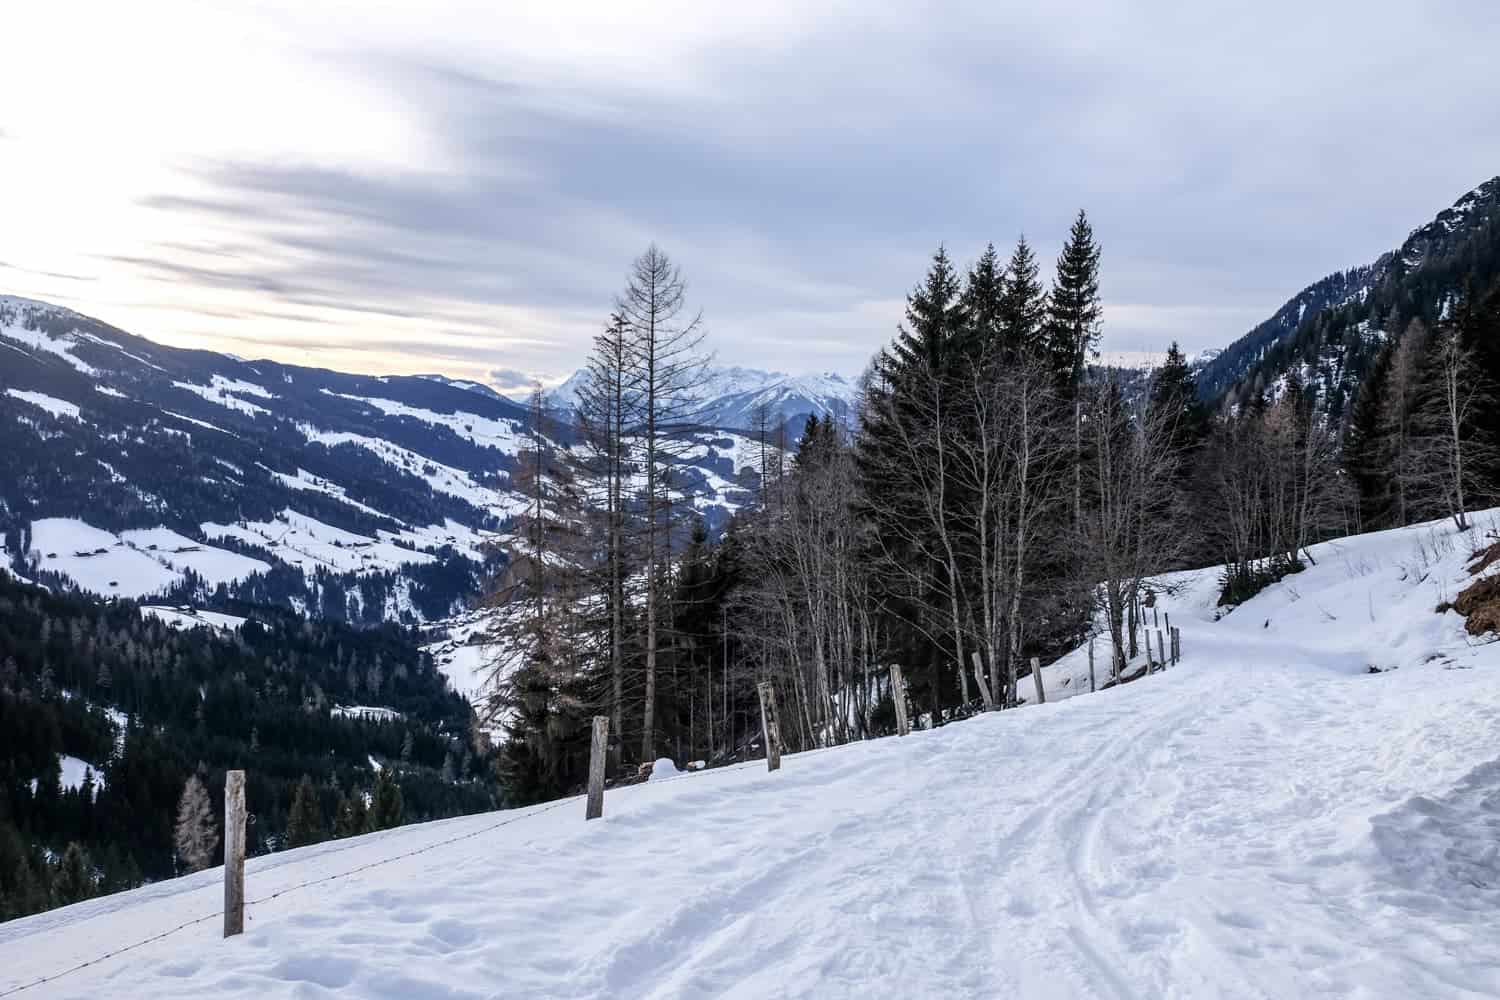 Views from Snowshoeing in Alpach, Alpbachtal valley in Austria